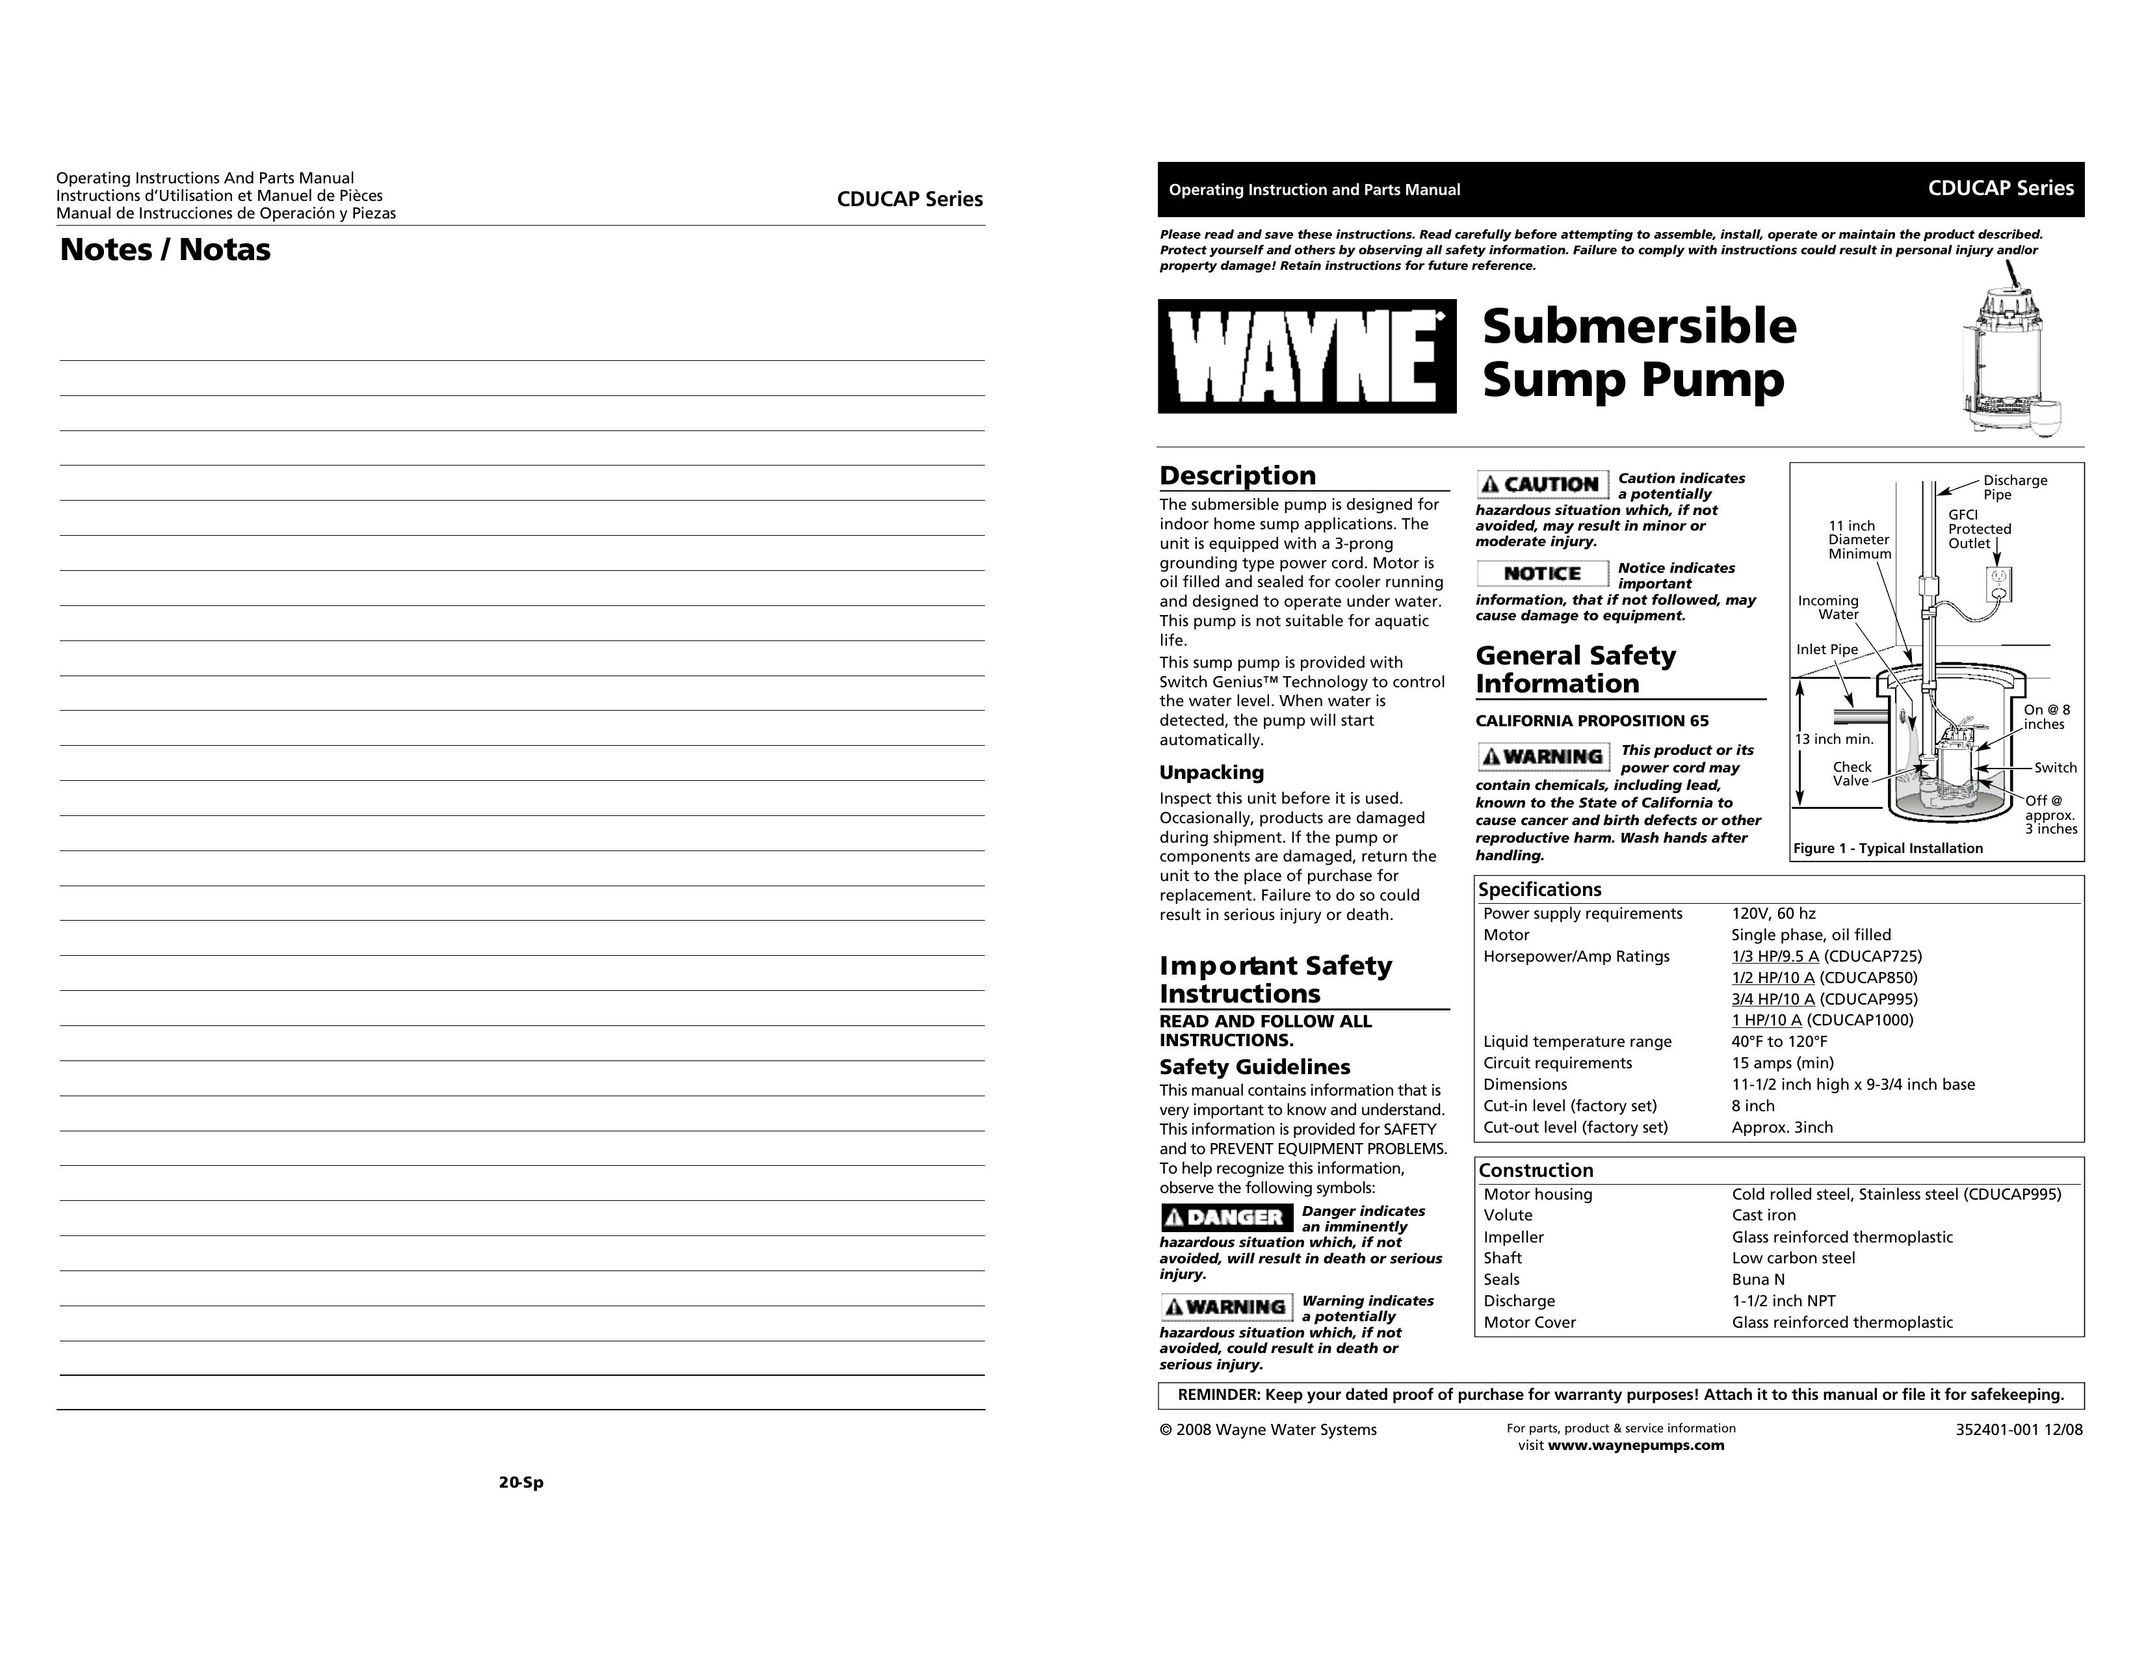 Wayne CDUCAP Series Plumbing Product User Manual